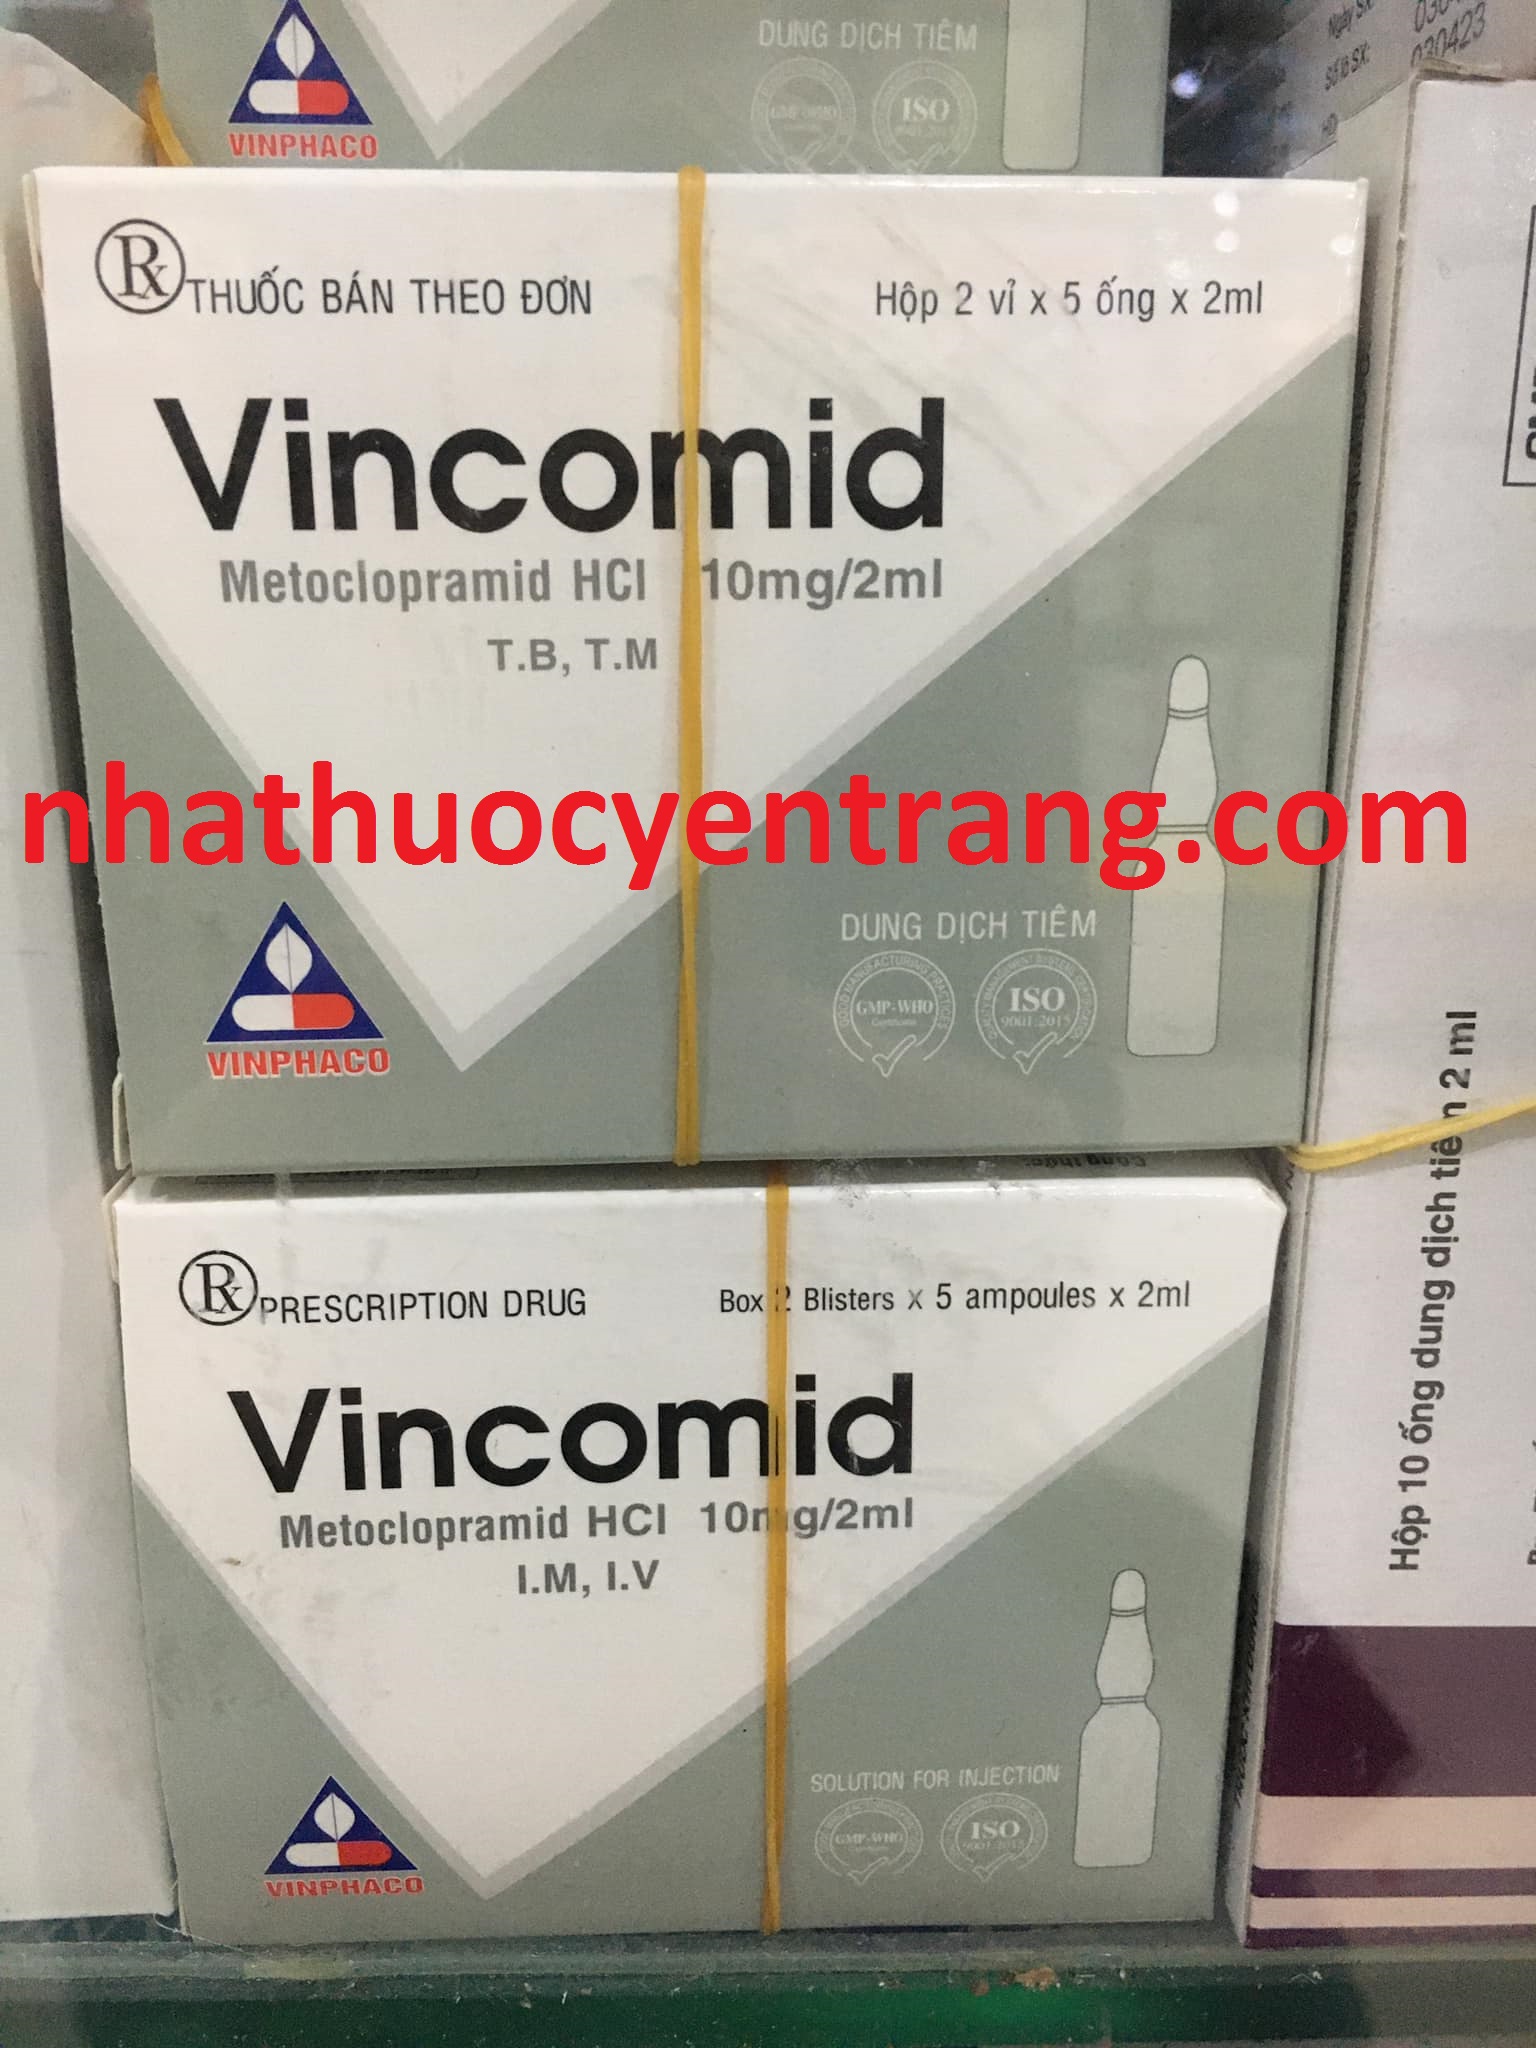 Vincomid